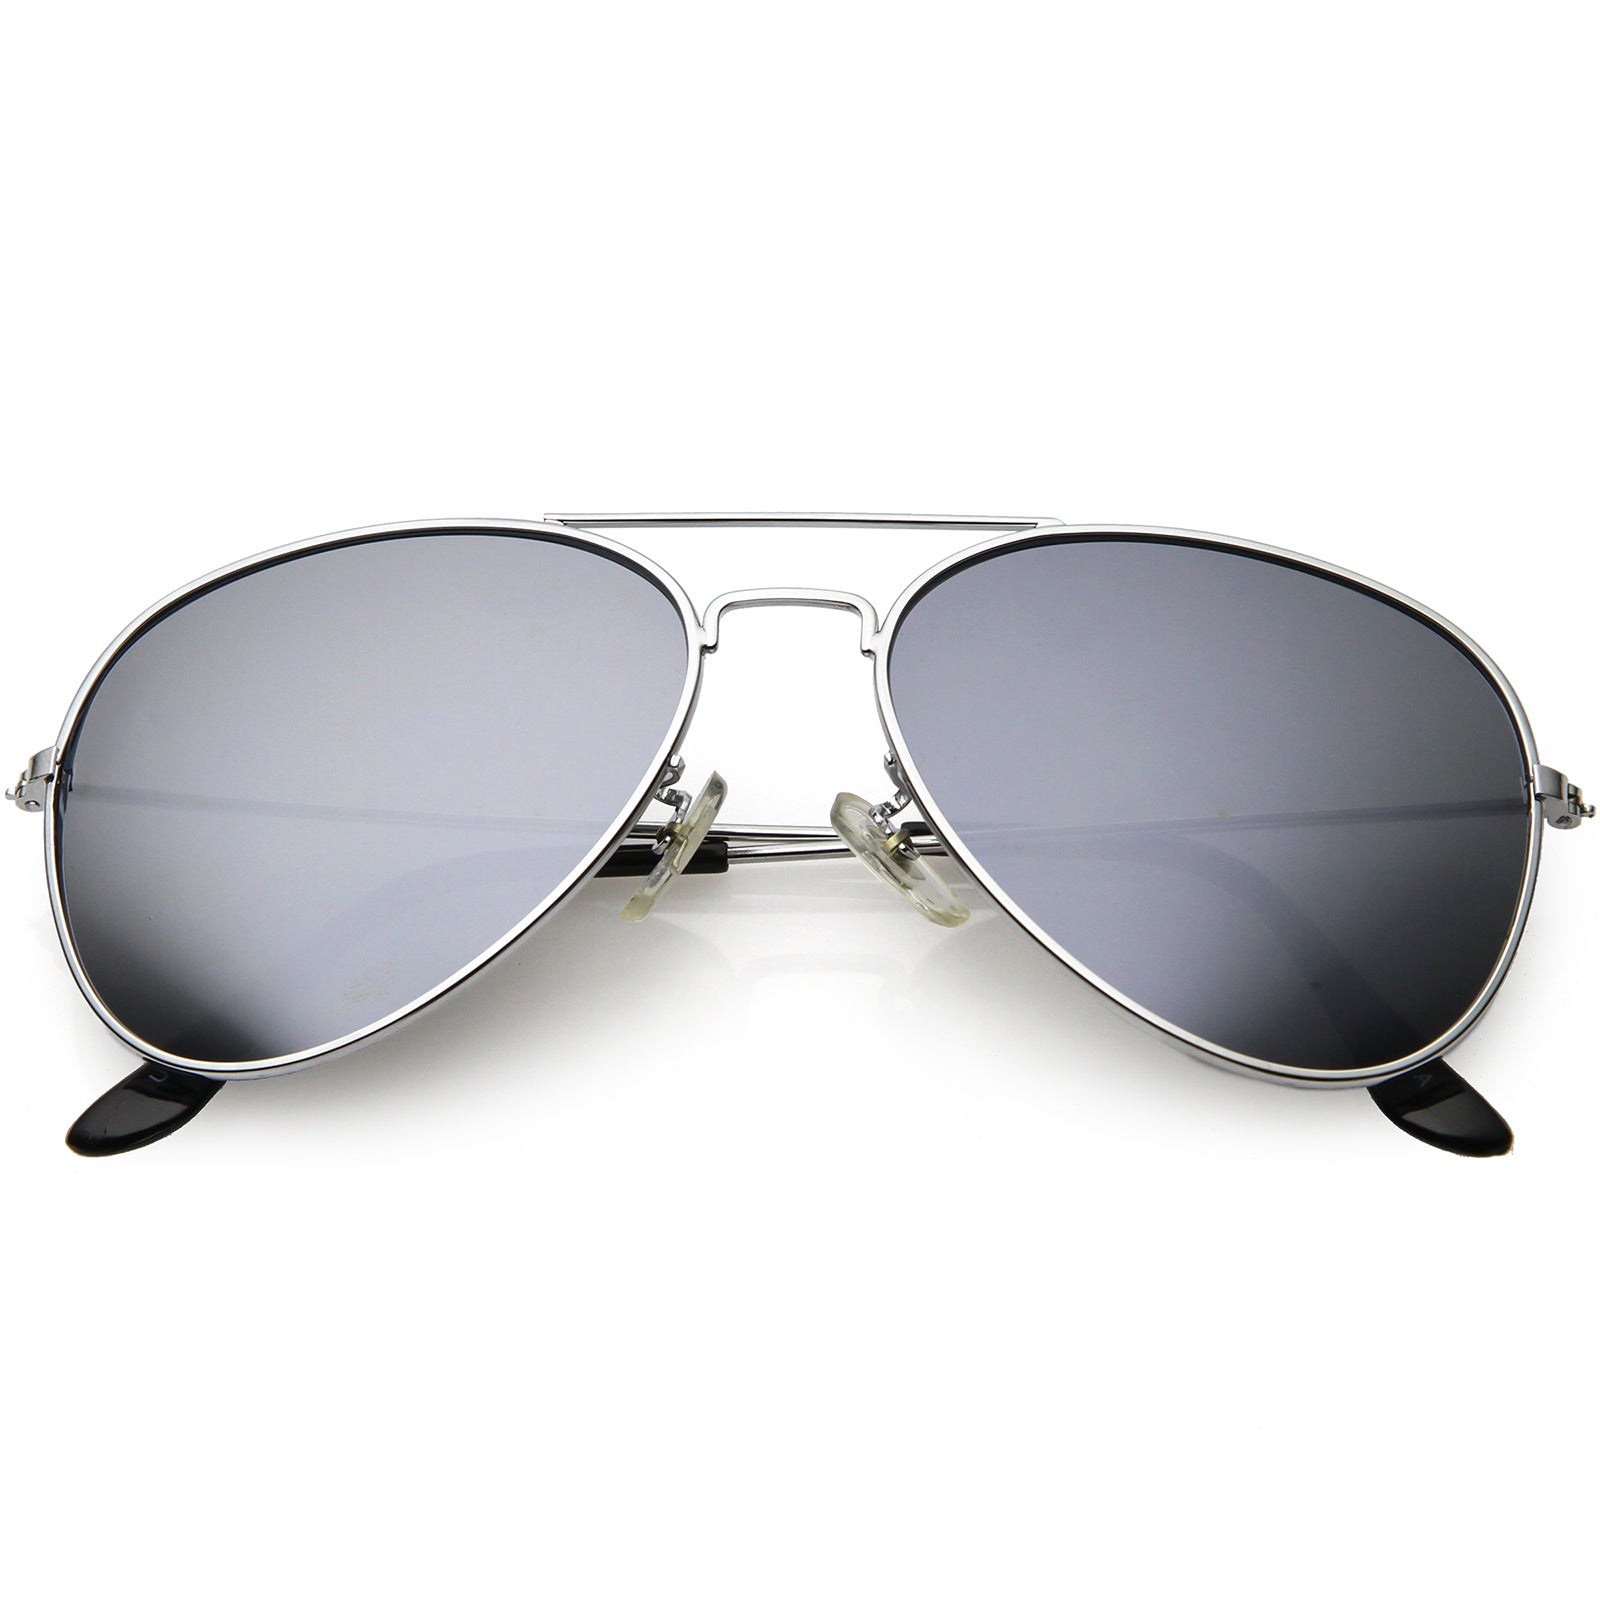 StellVia Modern Aviator Sunglasses for Men Women, Ultra-lightweight  Polarized Sun glasses with metal frame, Silver Mirrored Lens UV400  Protection for